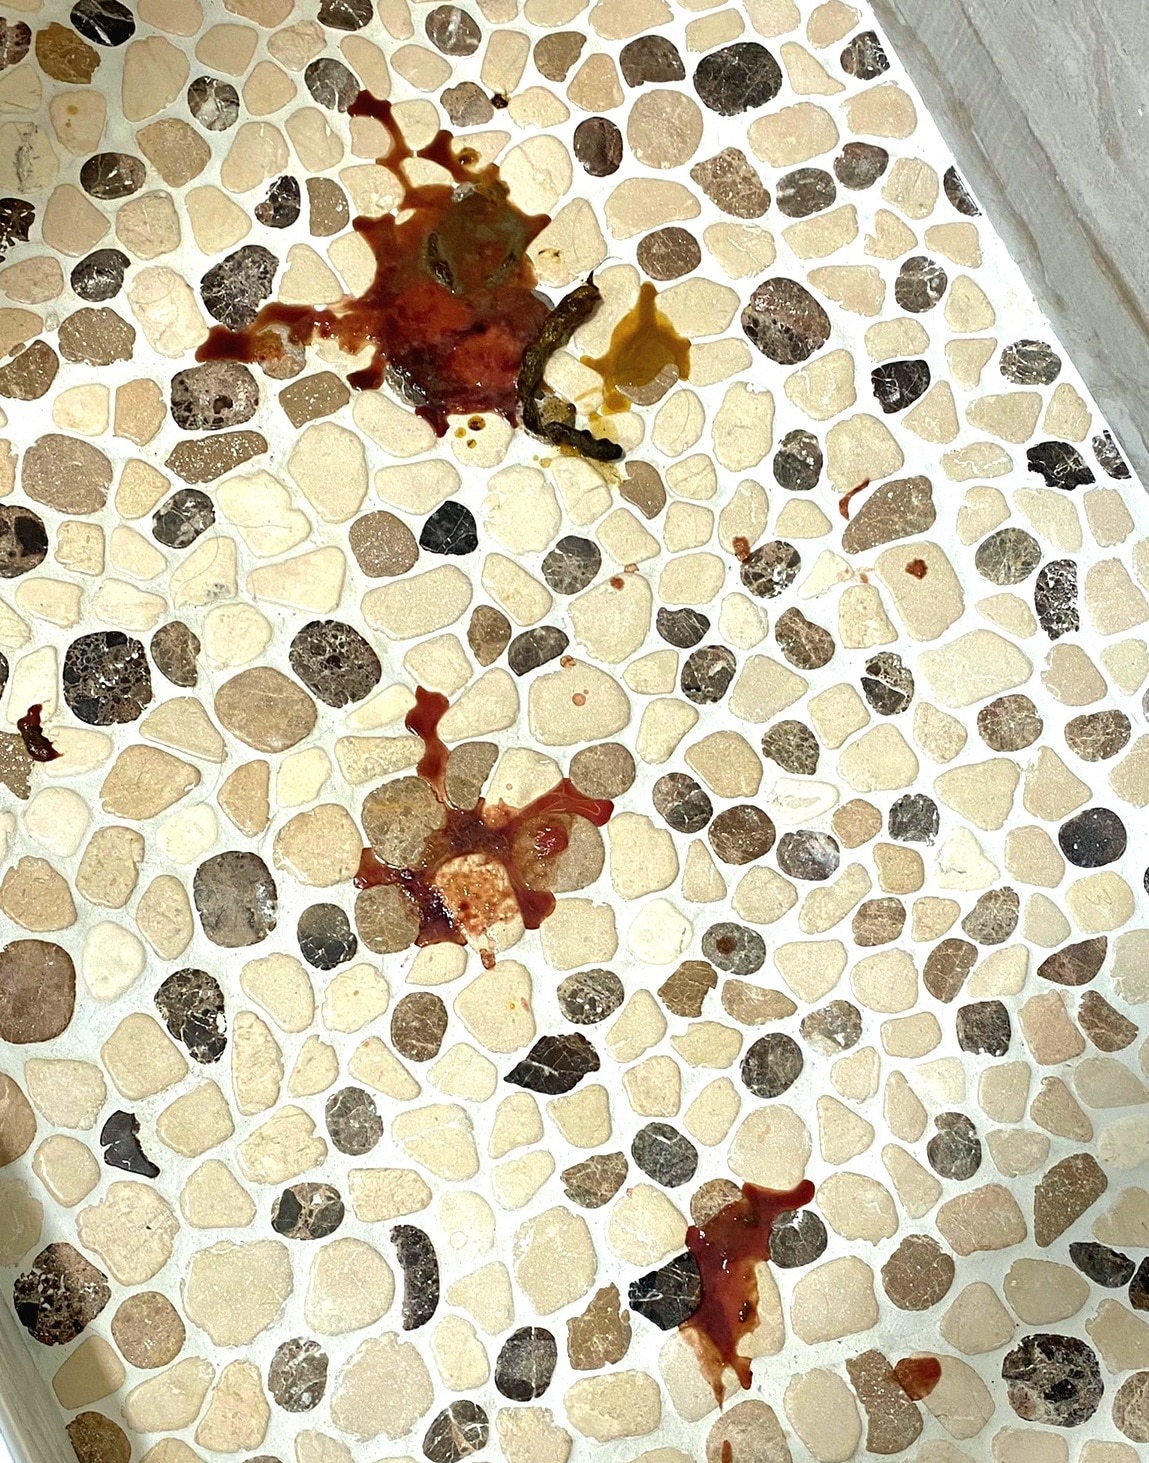 bathroom floor covered in dog poop with blood